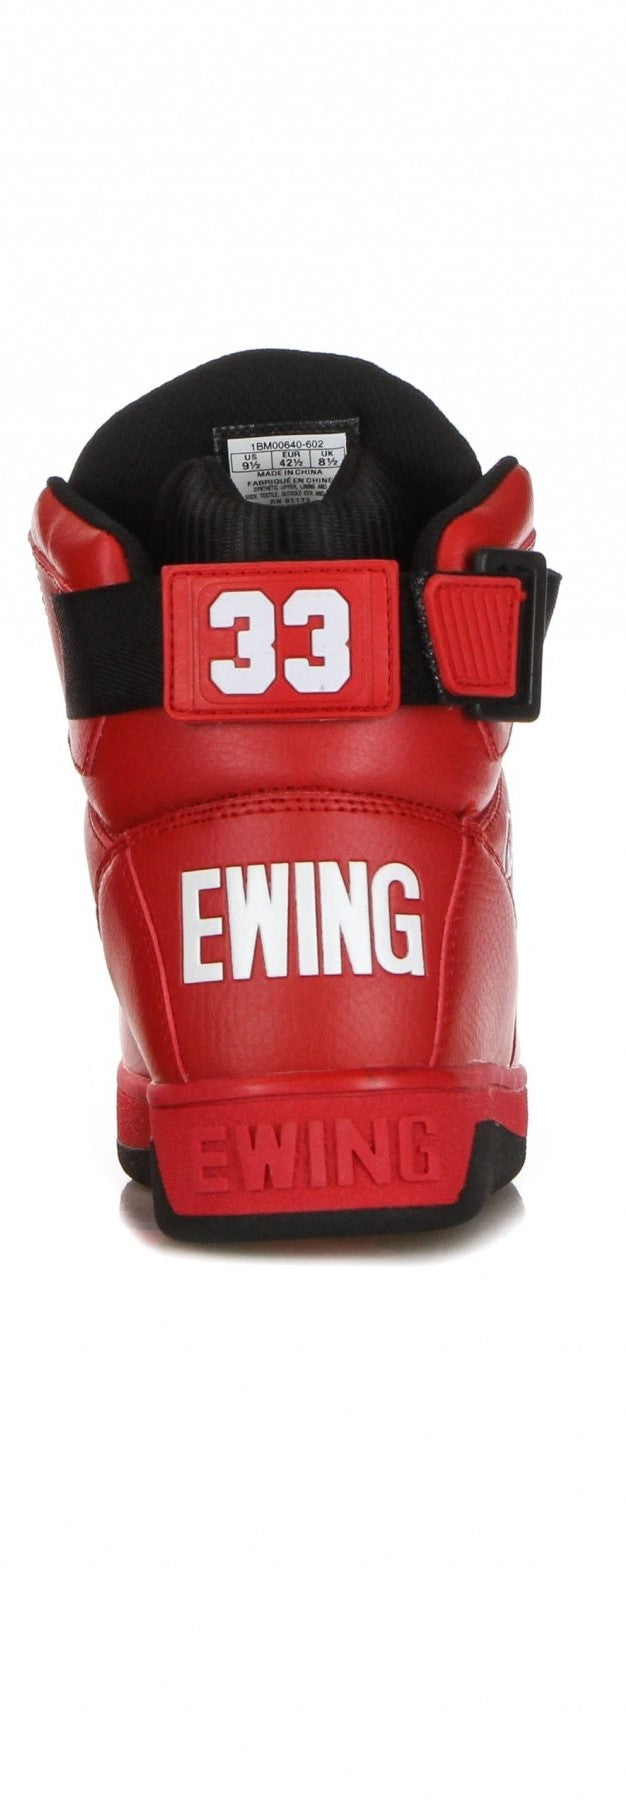 Ewing Athletics Men's High-Top Sneakers Ewing 33 HI PU Red/Black/White